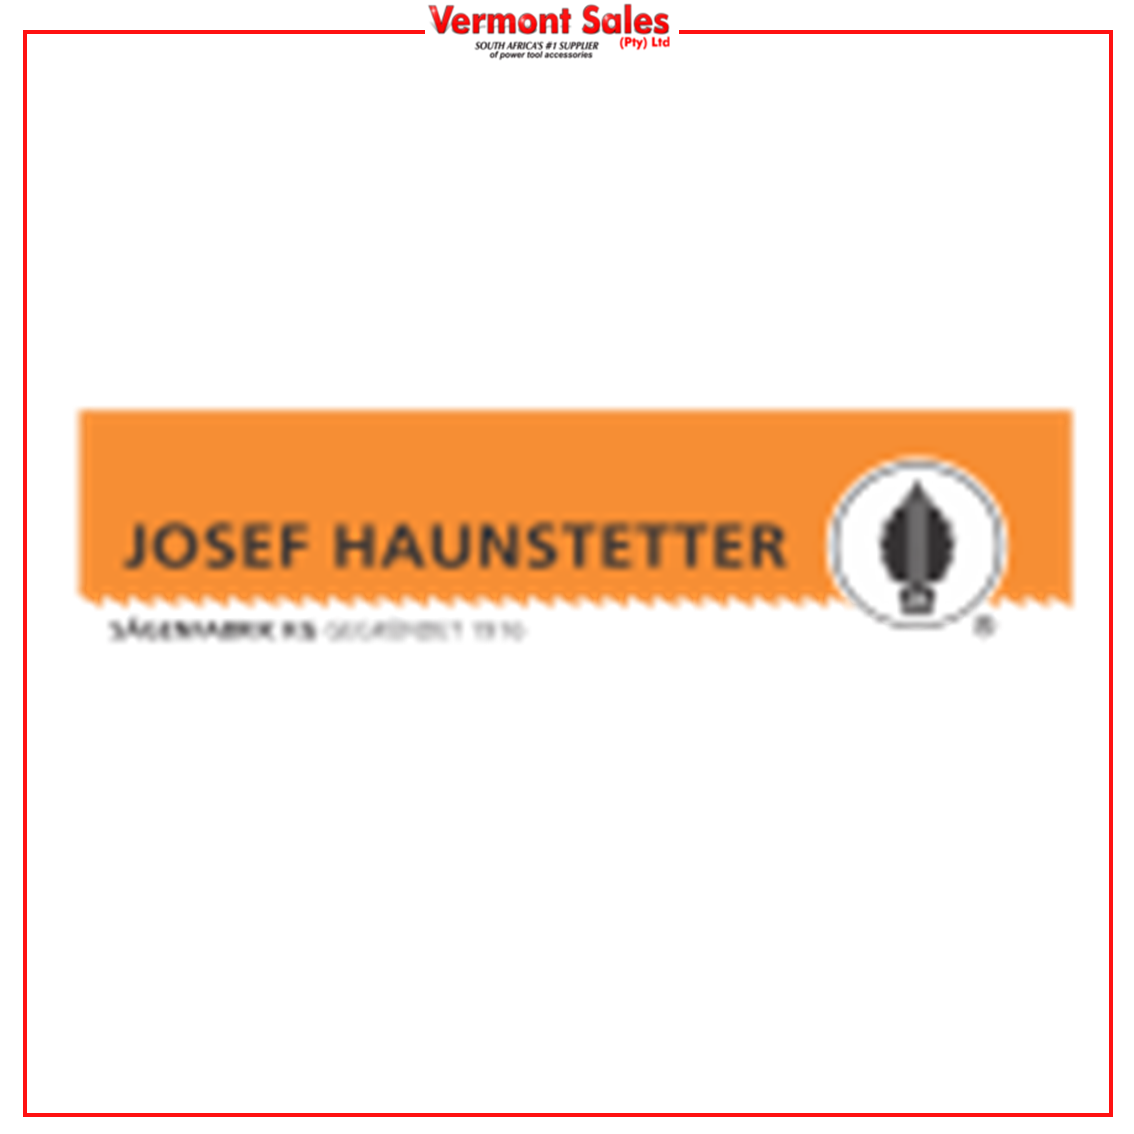 VERMONT - Josef Haunstetter Catalogue